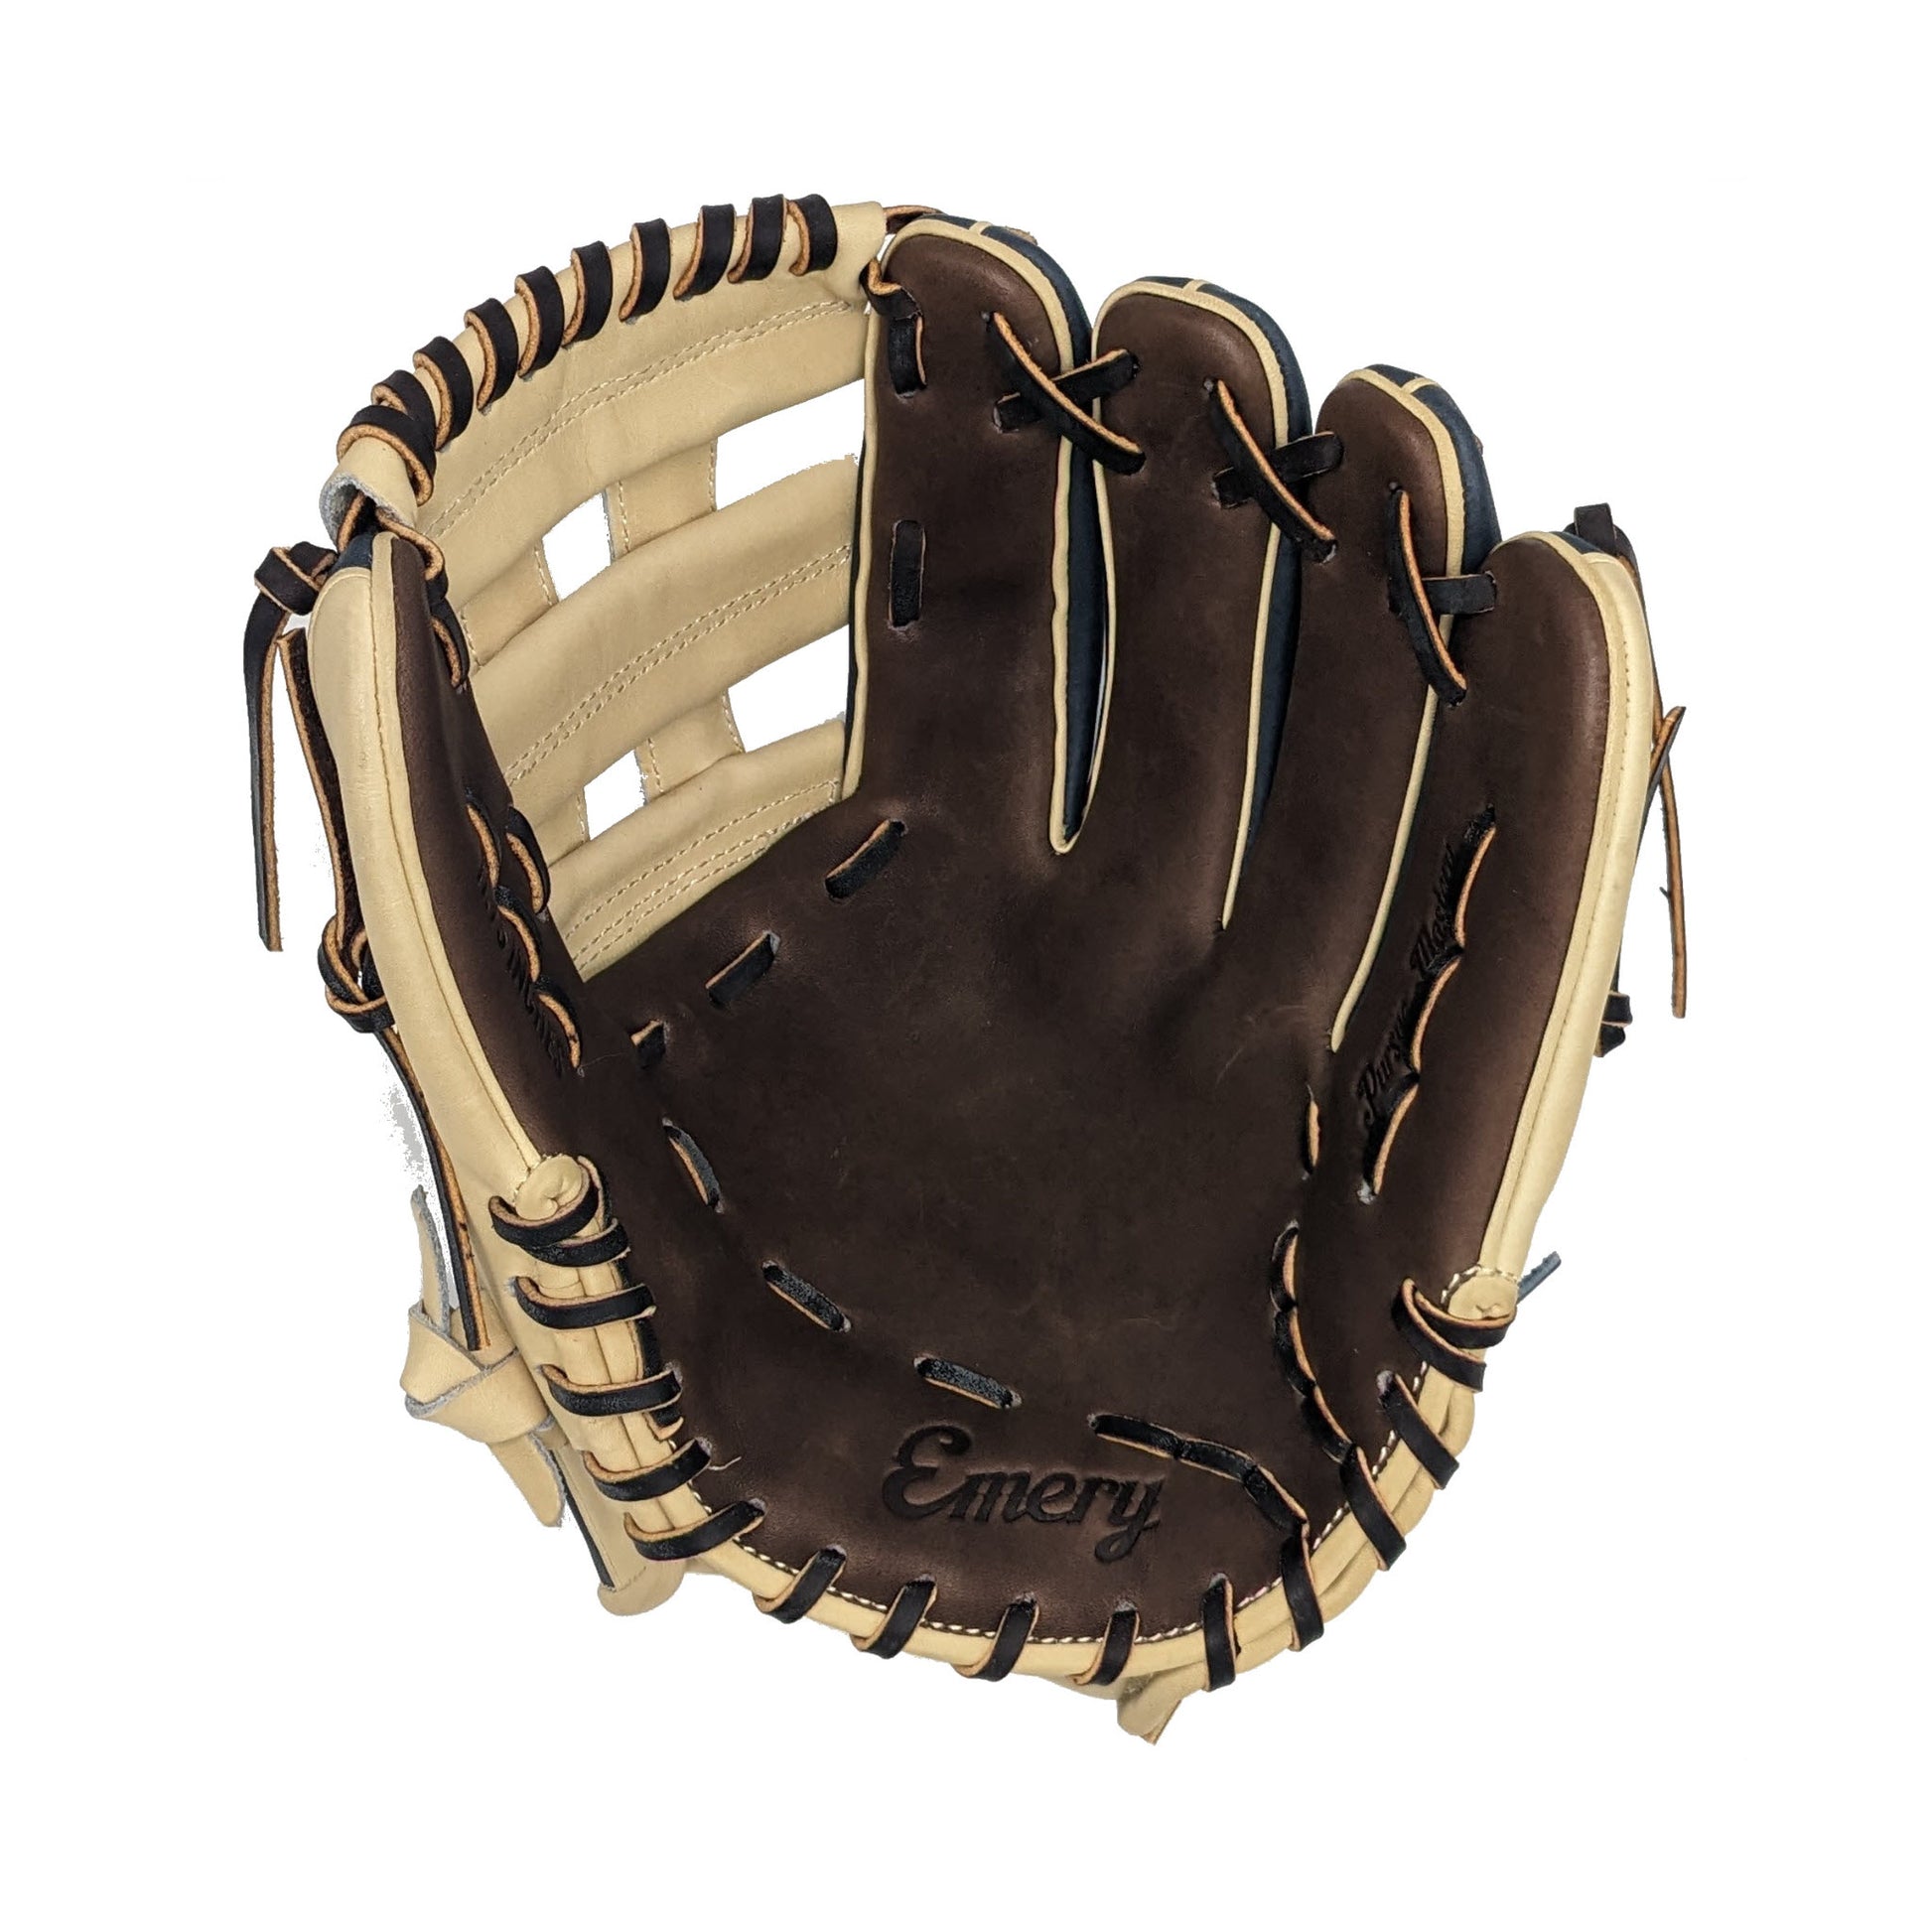 Brandeis (royal) Blue, Red, Black, and White (lace) Premium Kip Leather  Custom Baseball Glove by VEKOA.